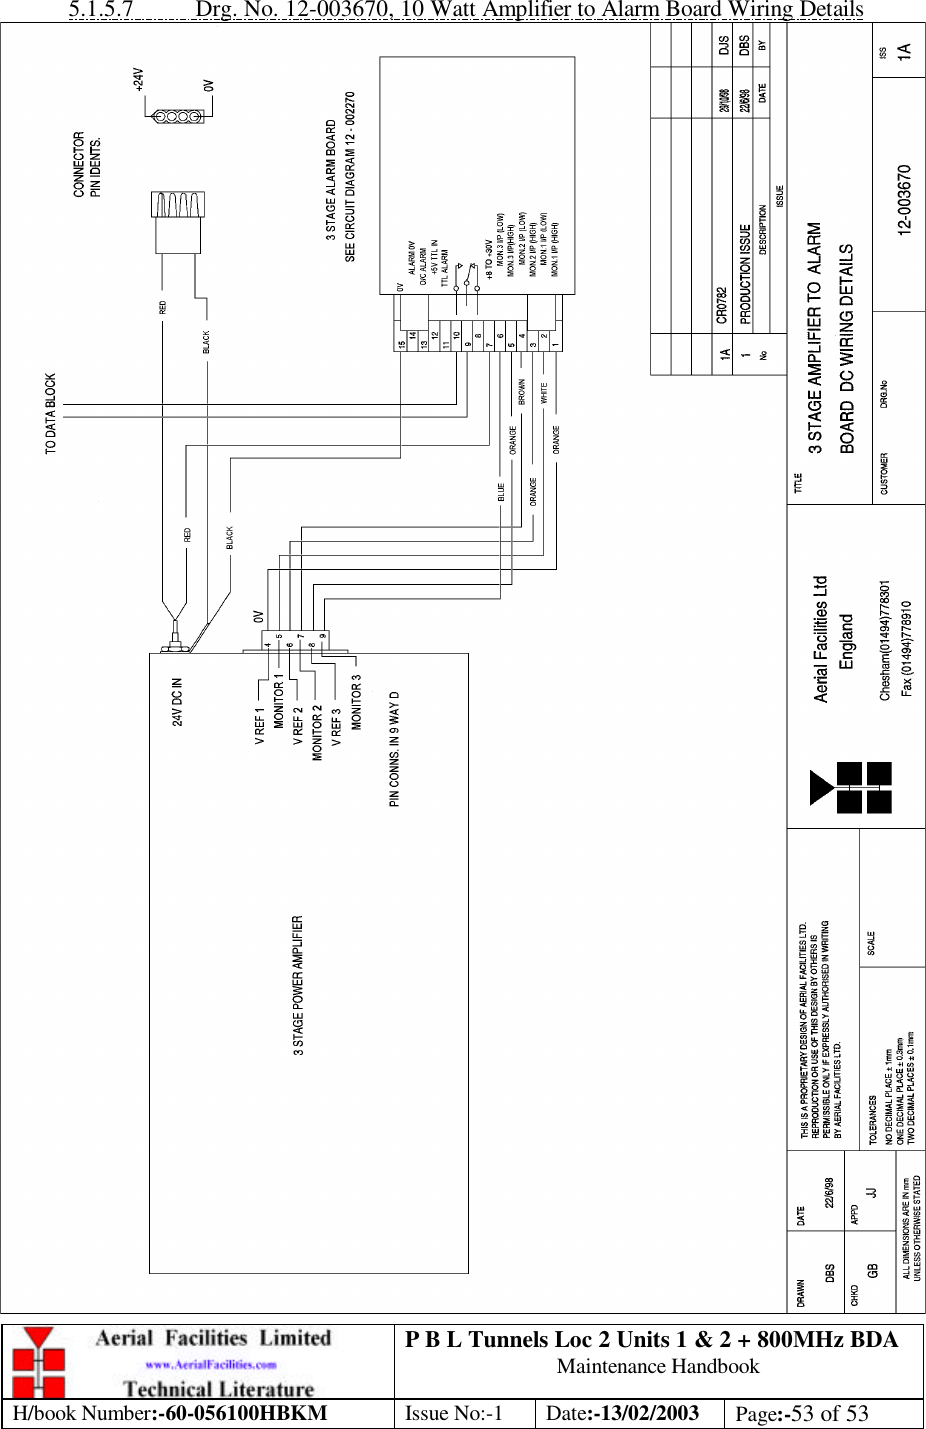 P B L Tunnels Loc 2 Units 1 &amp; 2 + 800MHz BDA Maintenance Handbook H/book Number:-60-056100HBKM Issue No:-1 Date:-13/02/2003 Page:-53 of 53  5.1.5.7 Drg. No. 12-003670, 10 Watt Amplifier to Alarm Board Wiring Details  